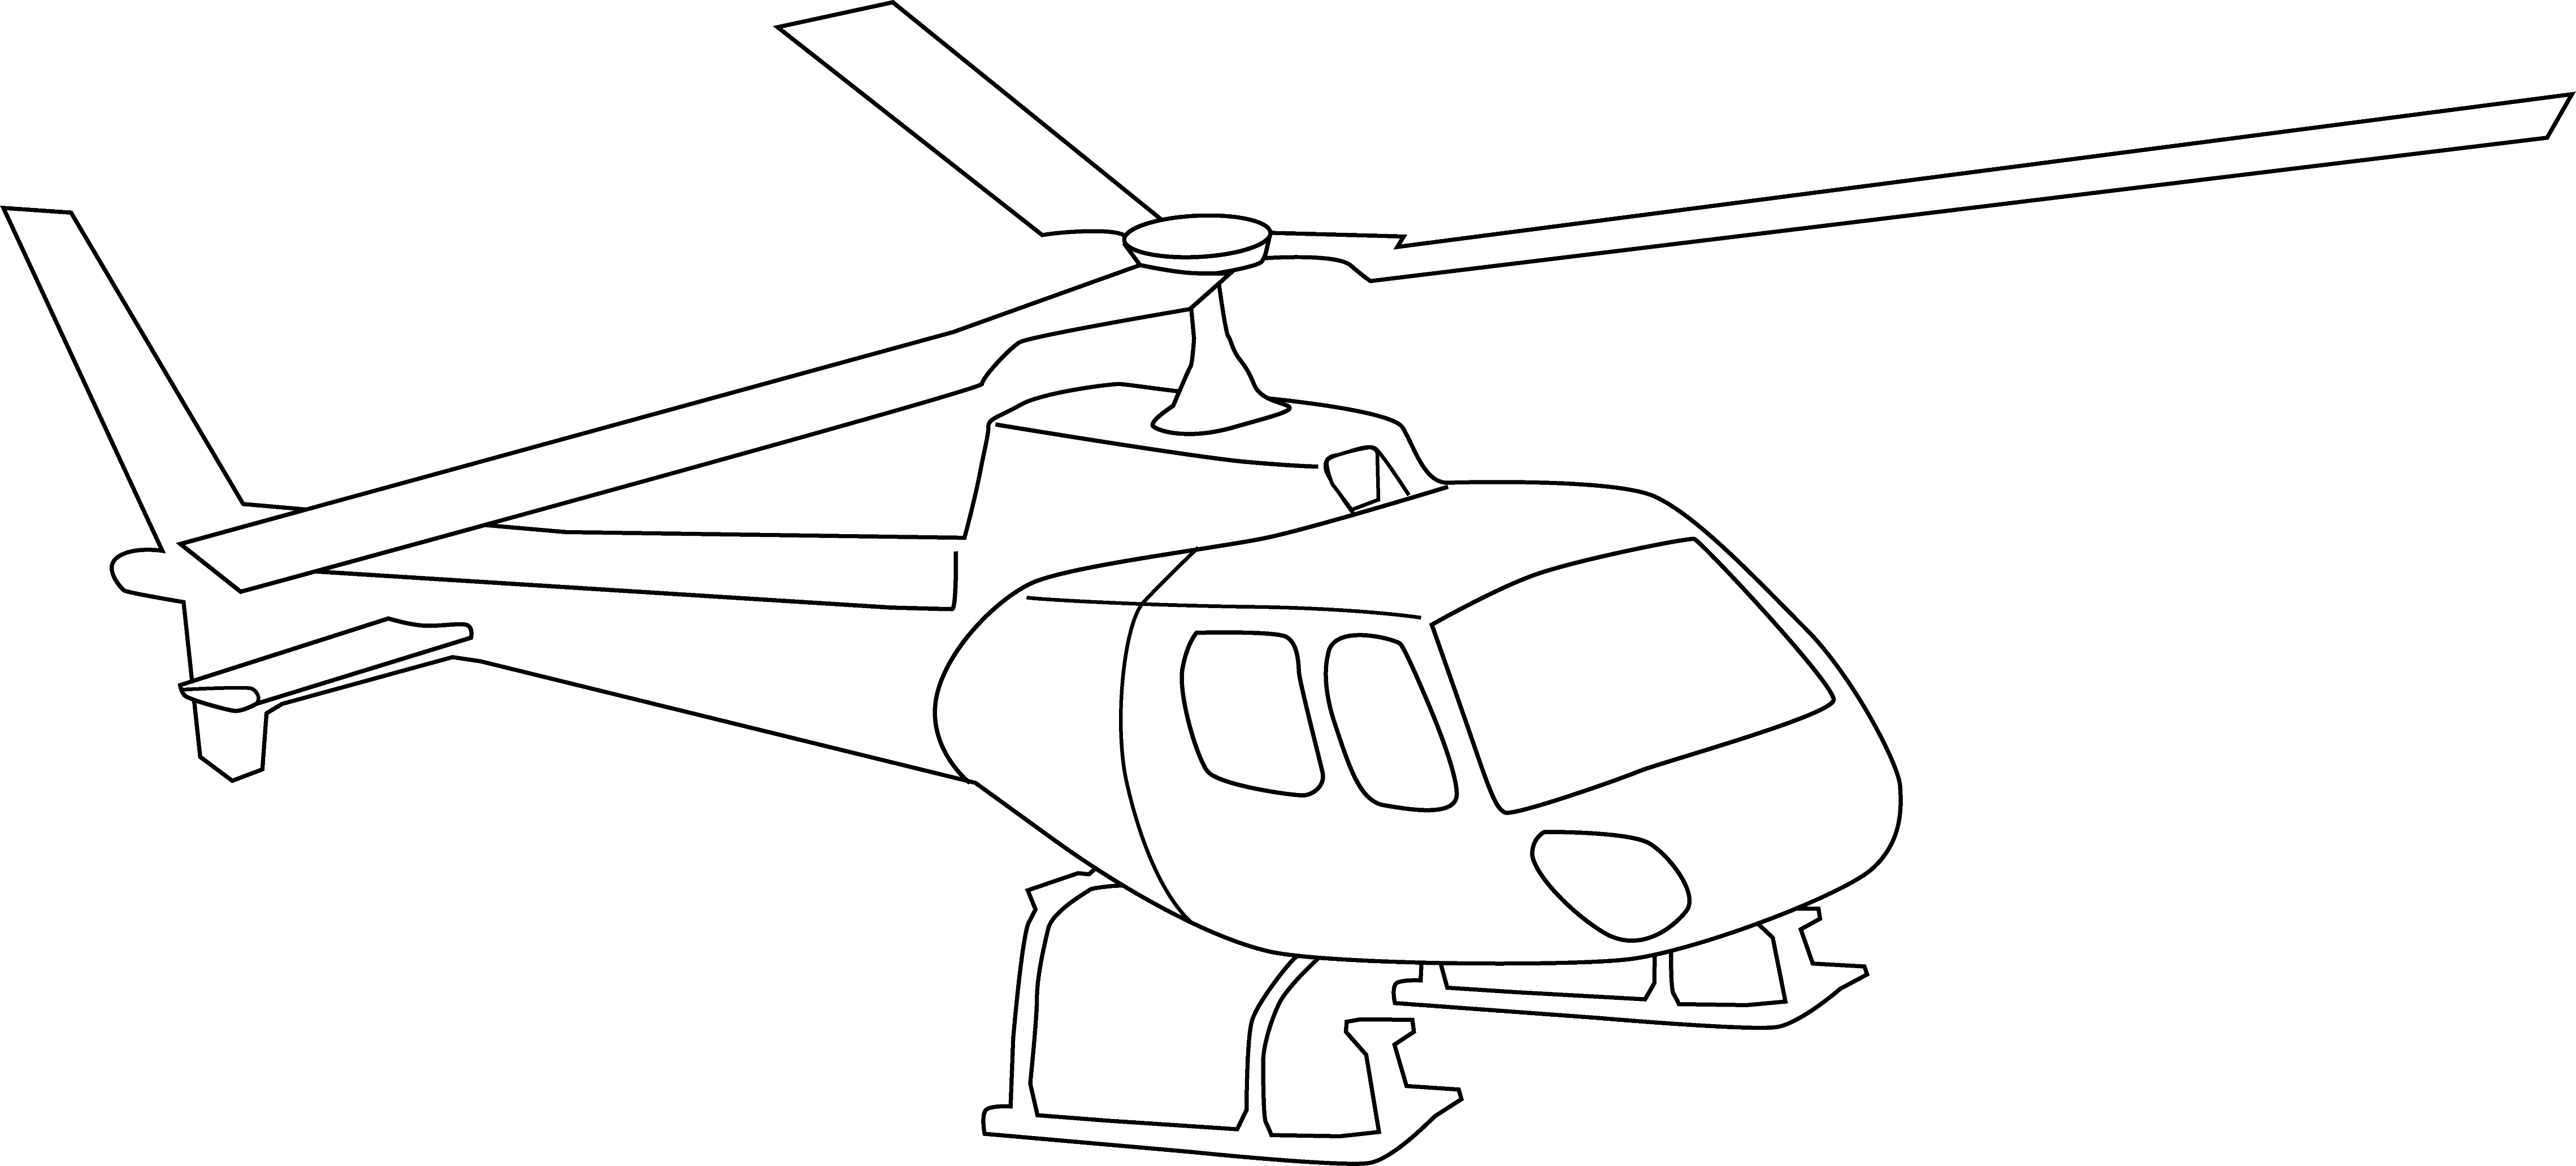 Hélicoptère